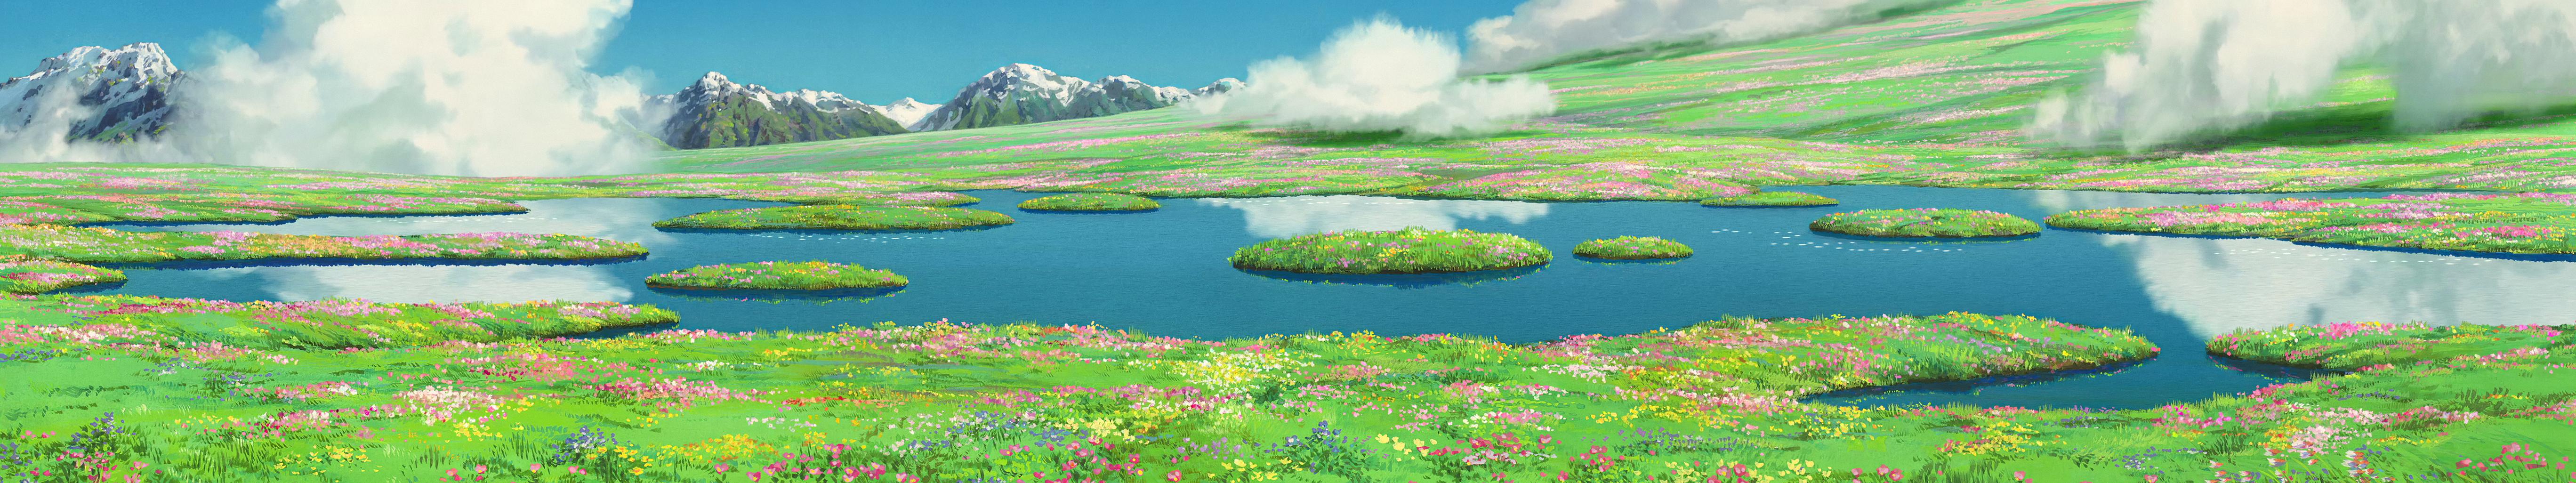 Studio Ghibli Landscape Wallpapers